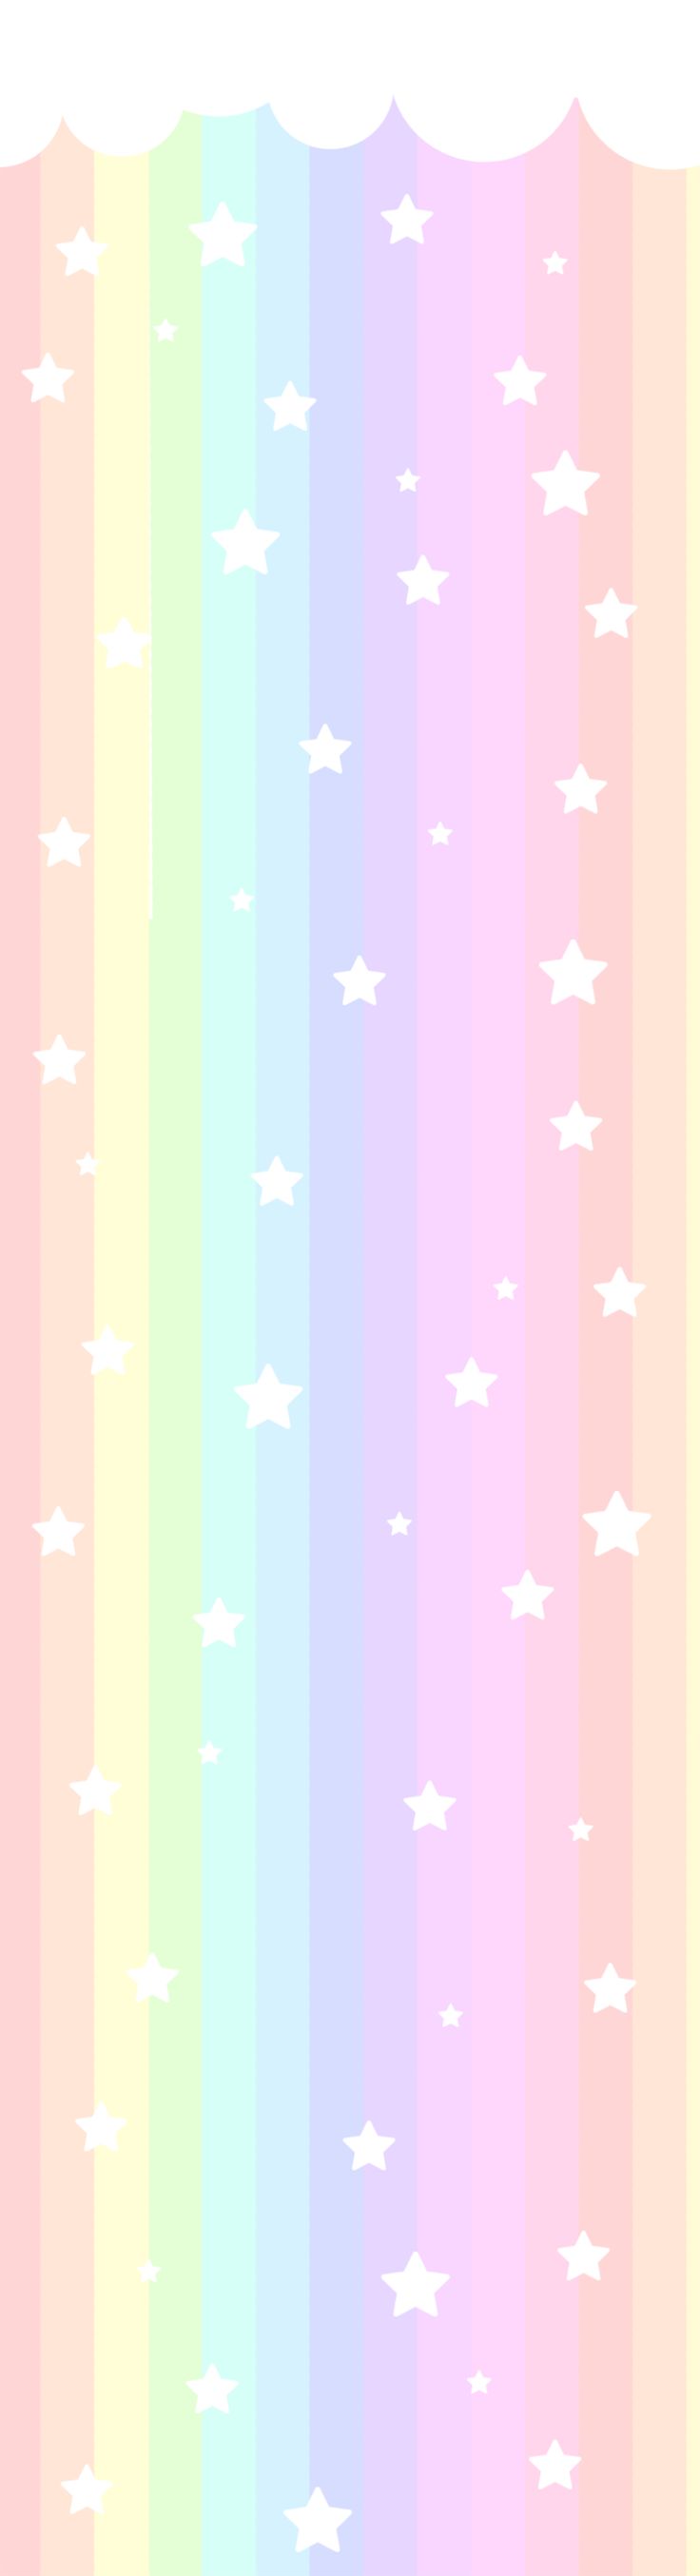 i kno u luv rainbows just TAKE IT. Rainbow wallpaper, Unicorn wallpaper, Pretty wallpaper